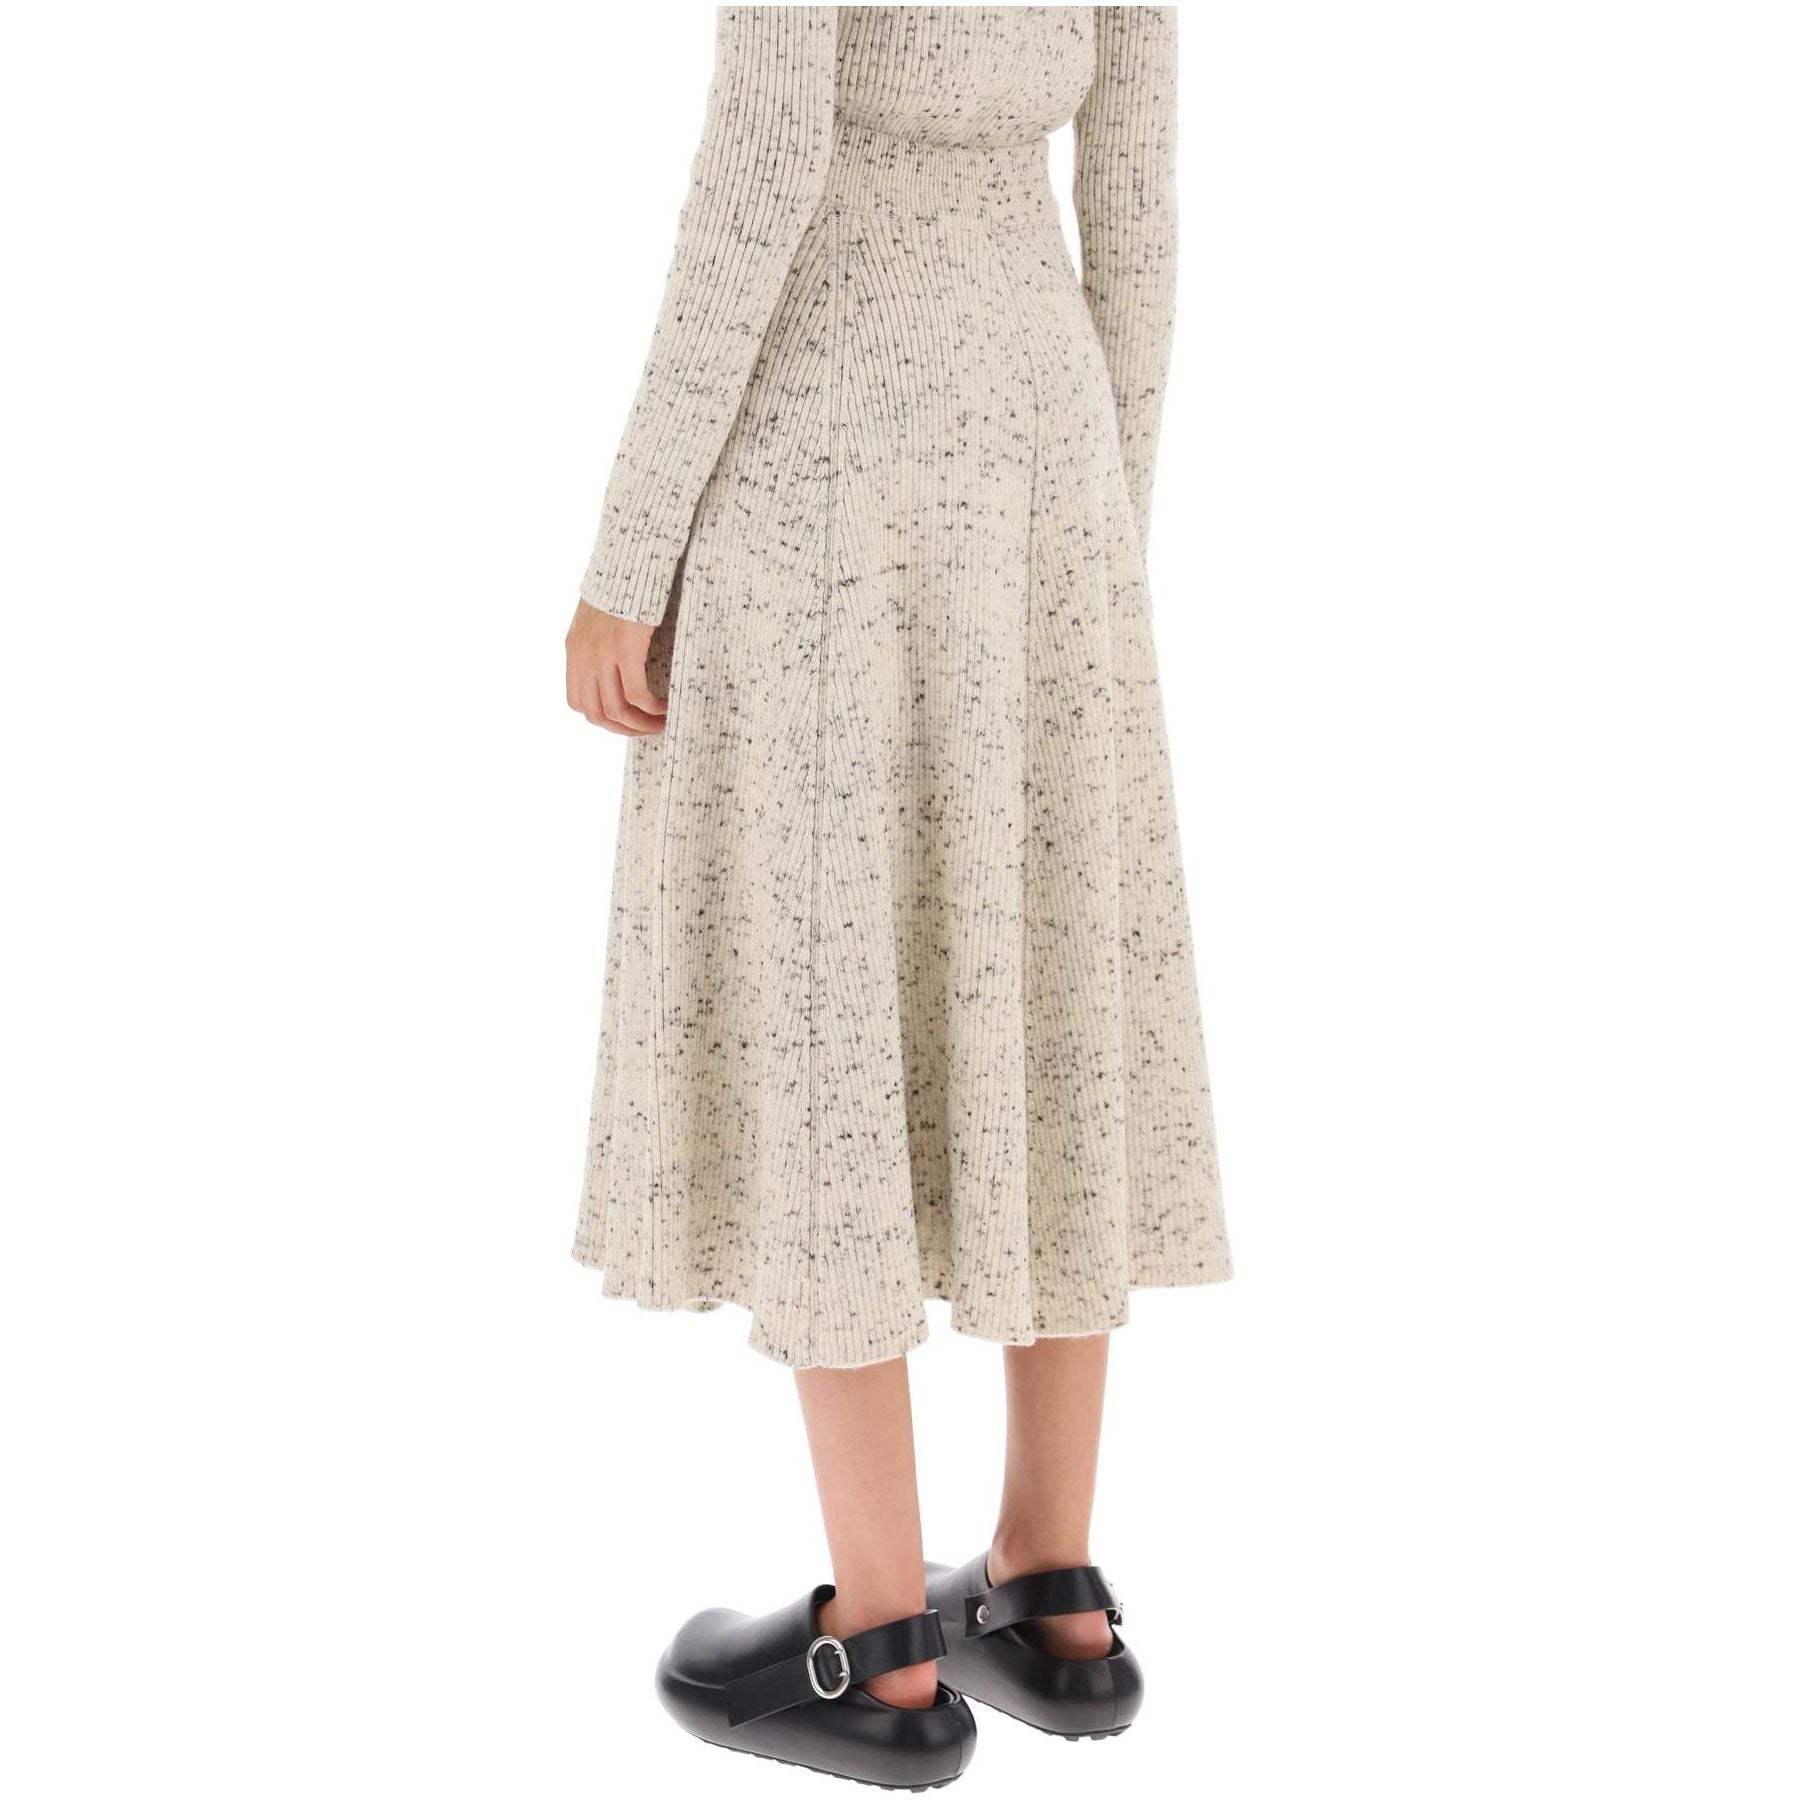 Speckled Wool Midi Skirt